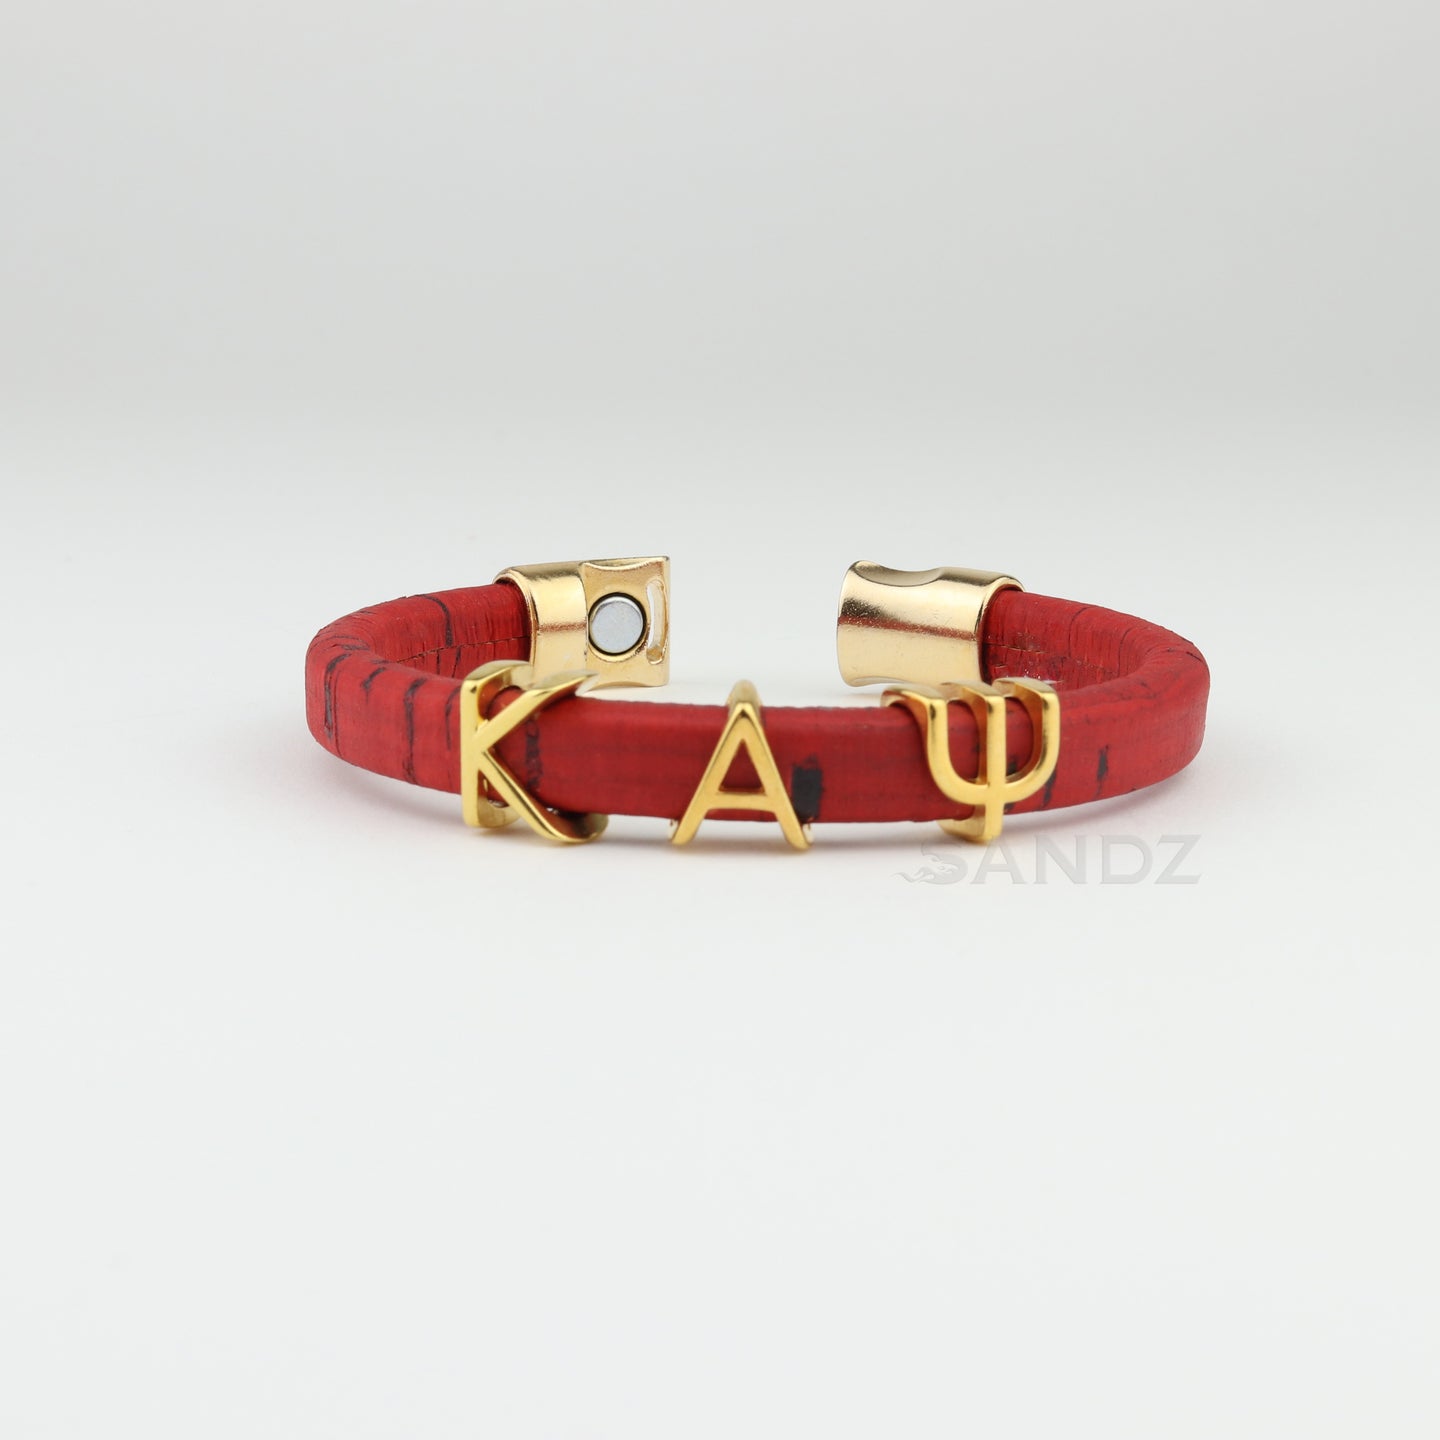 Kappa Alpha Psi cork bracelet - 